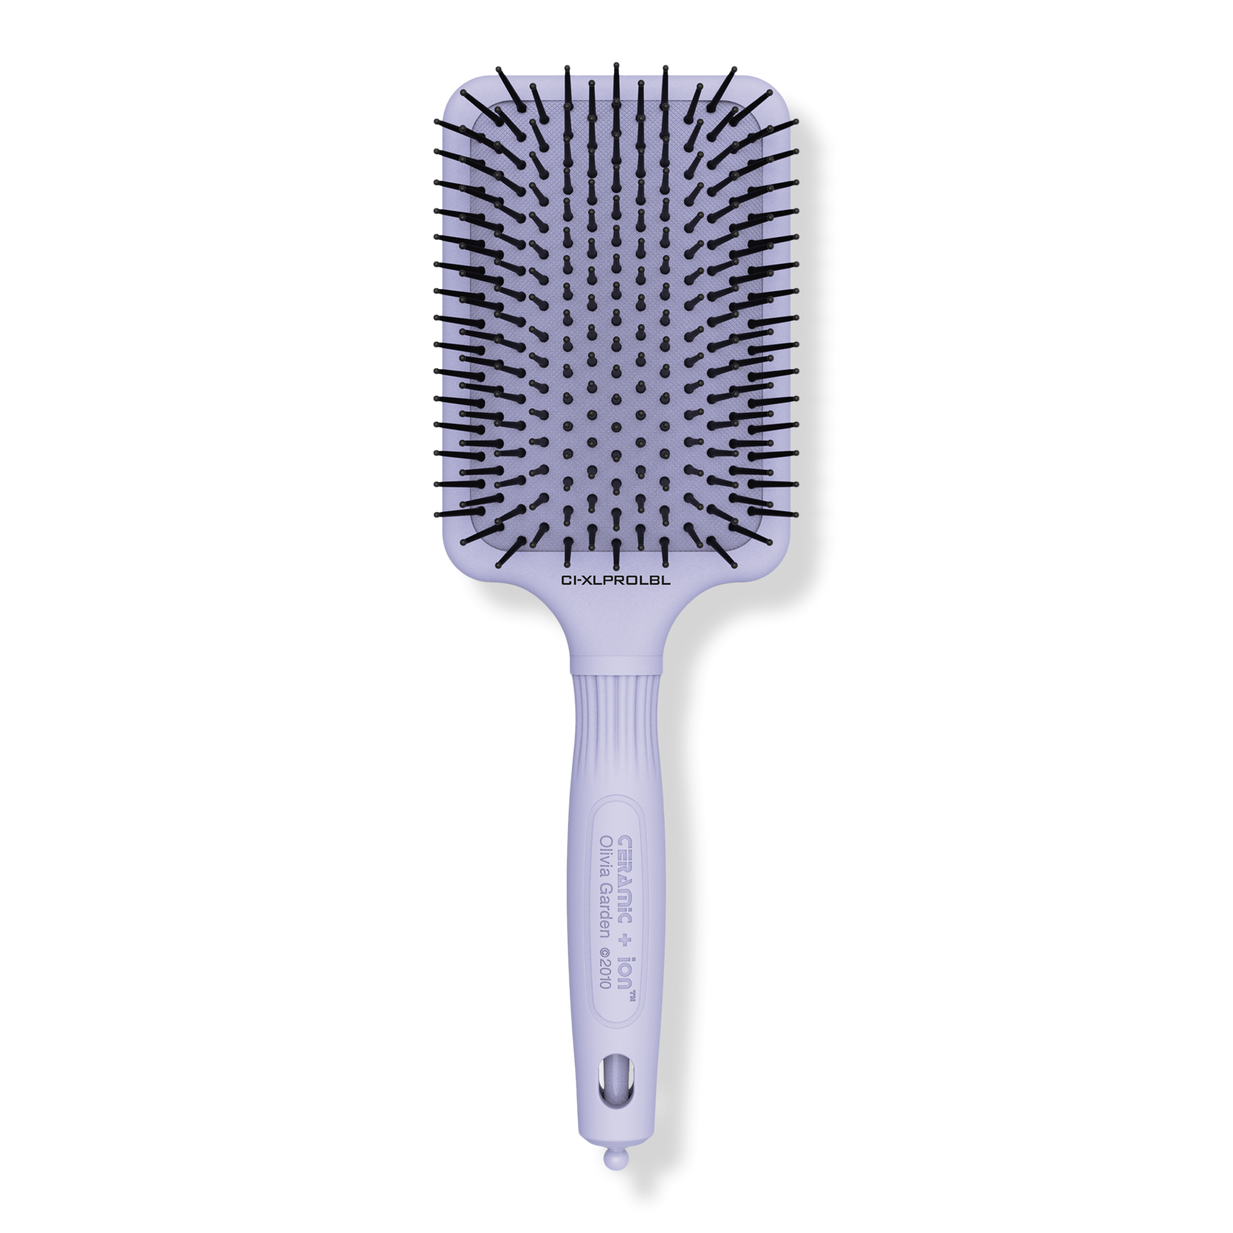 Ceramic + Ion XL Pro Vent Paddle Brush